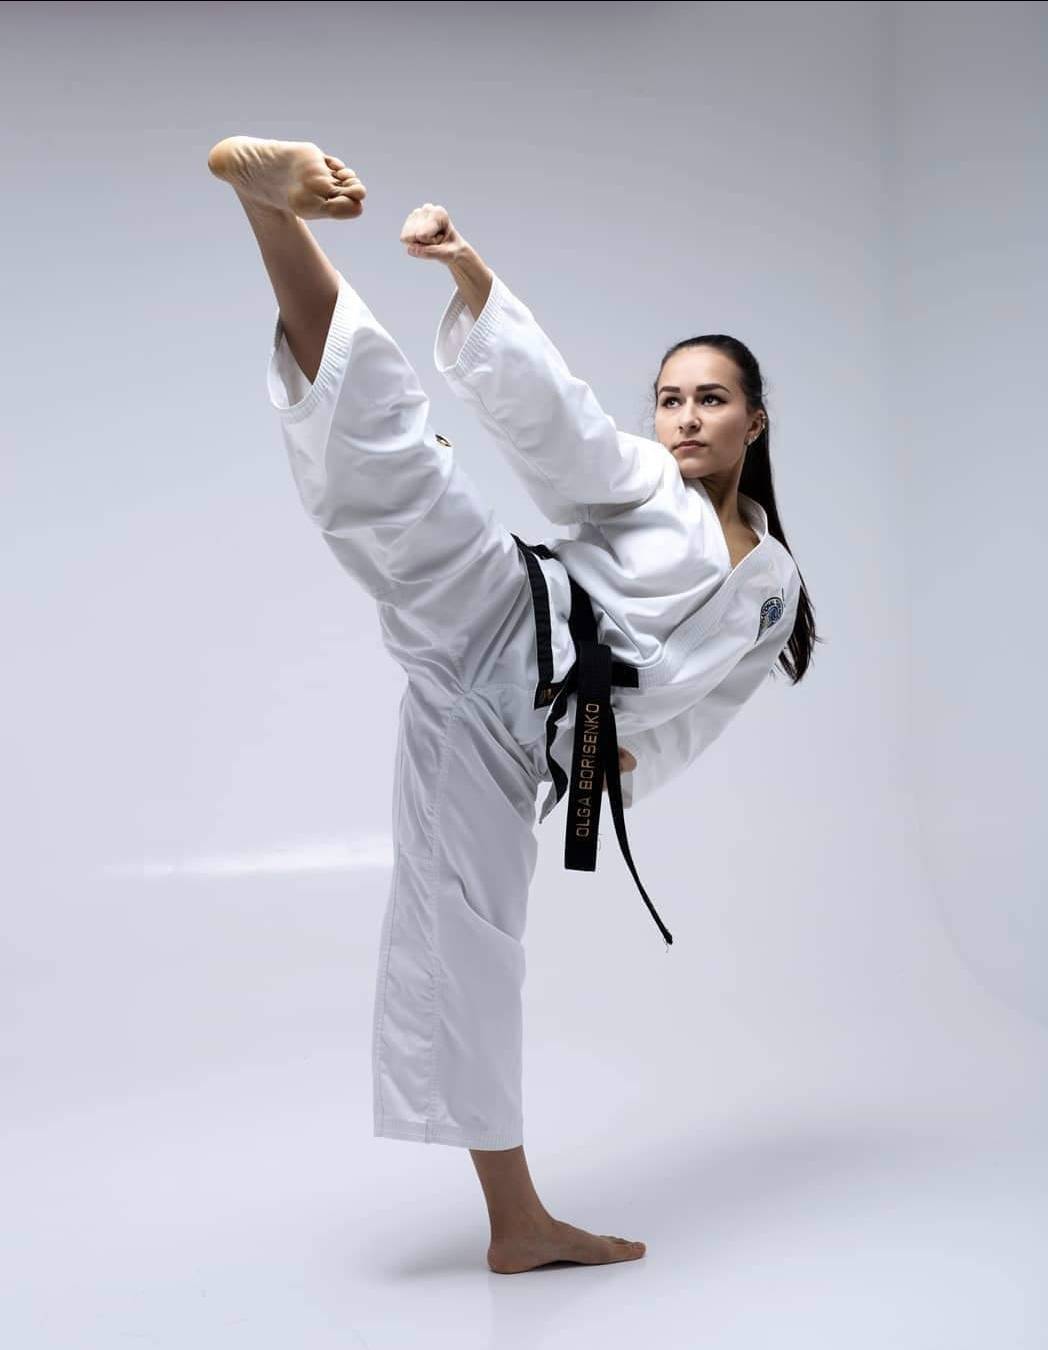 Taekwondo kick by erwin945 on DeviantArt